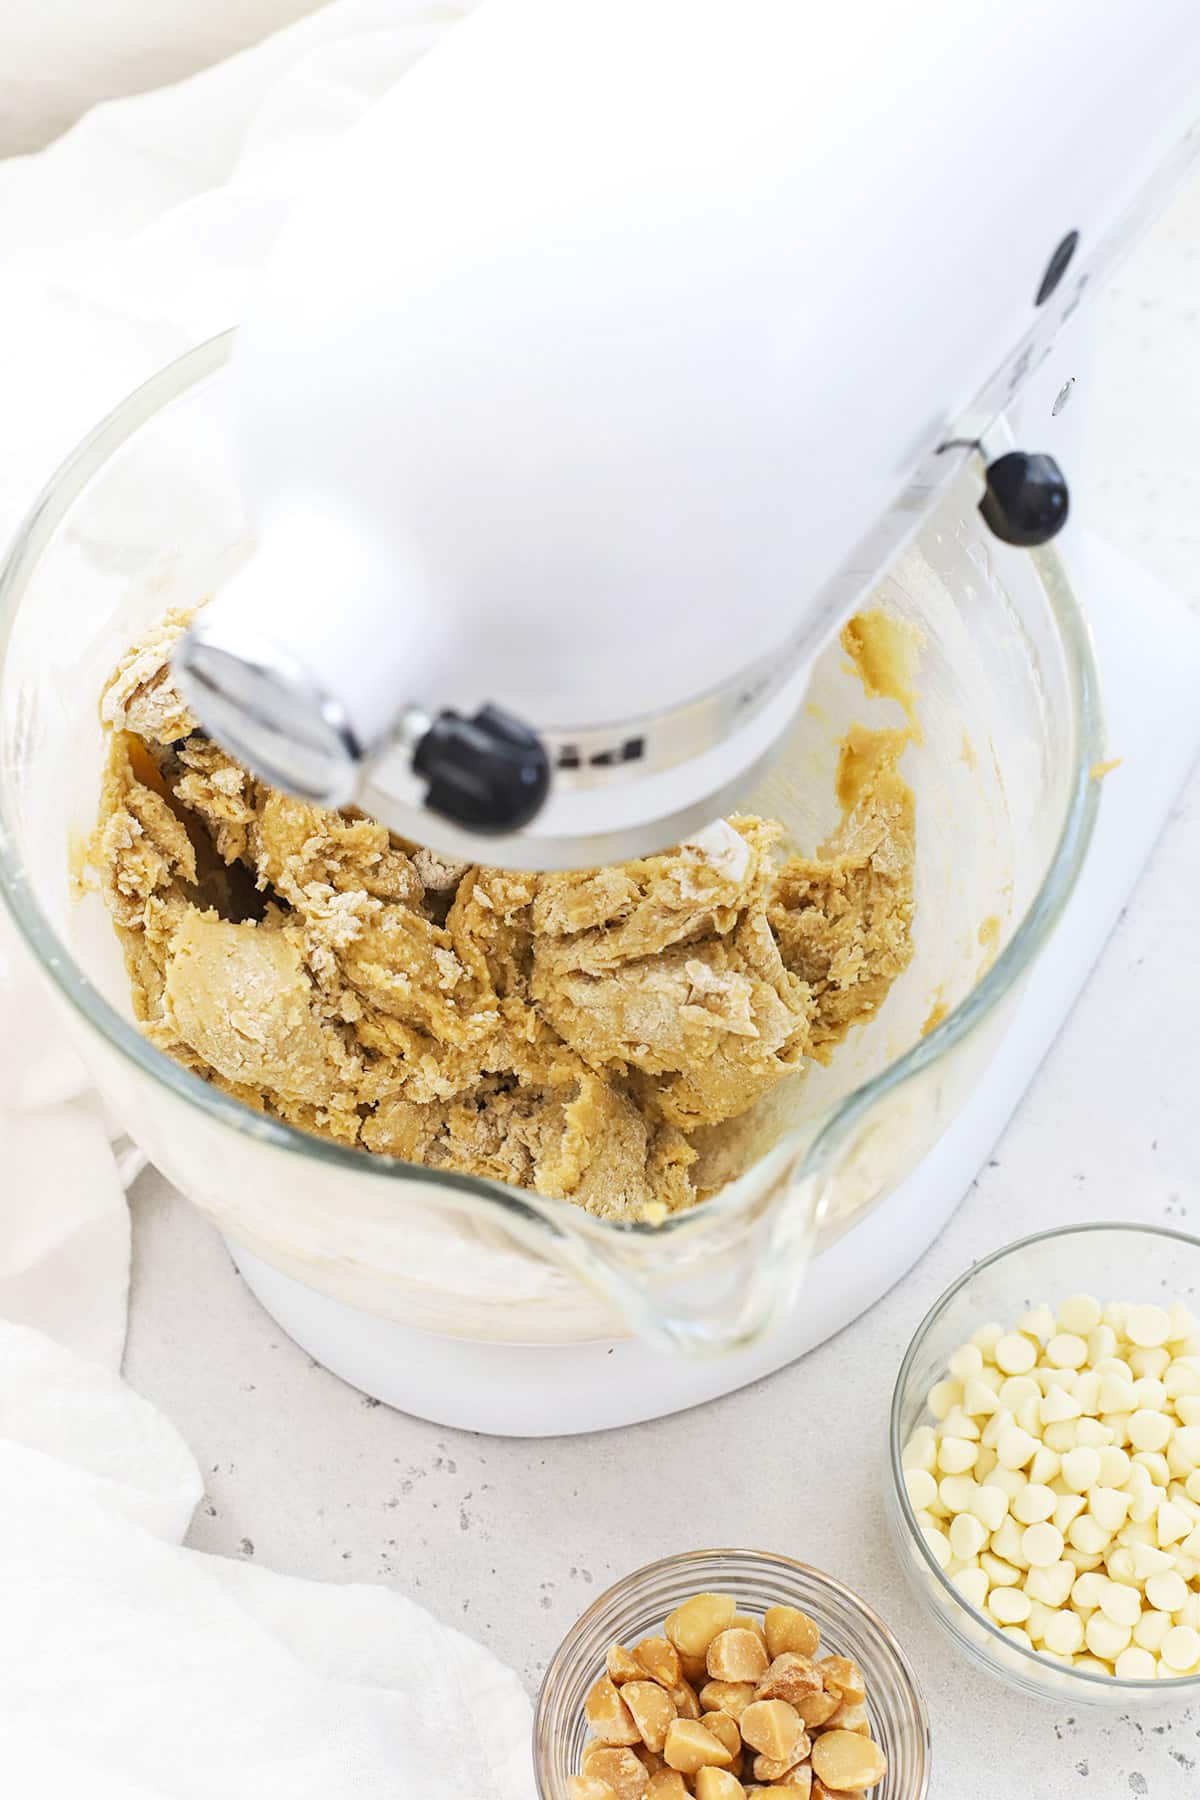 Mixing dry ingredients into gluten-free macadamia nut cookie dough